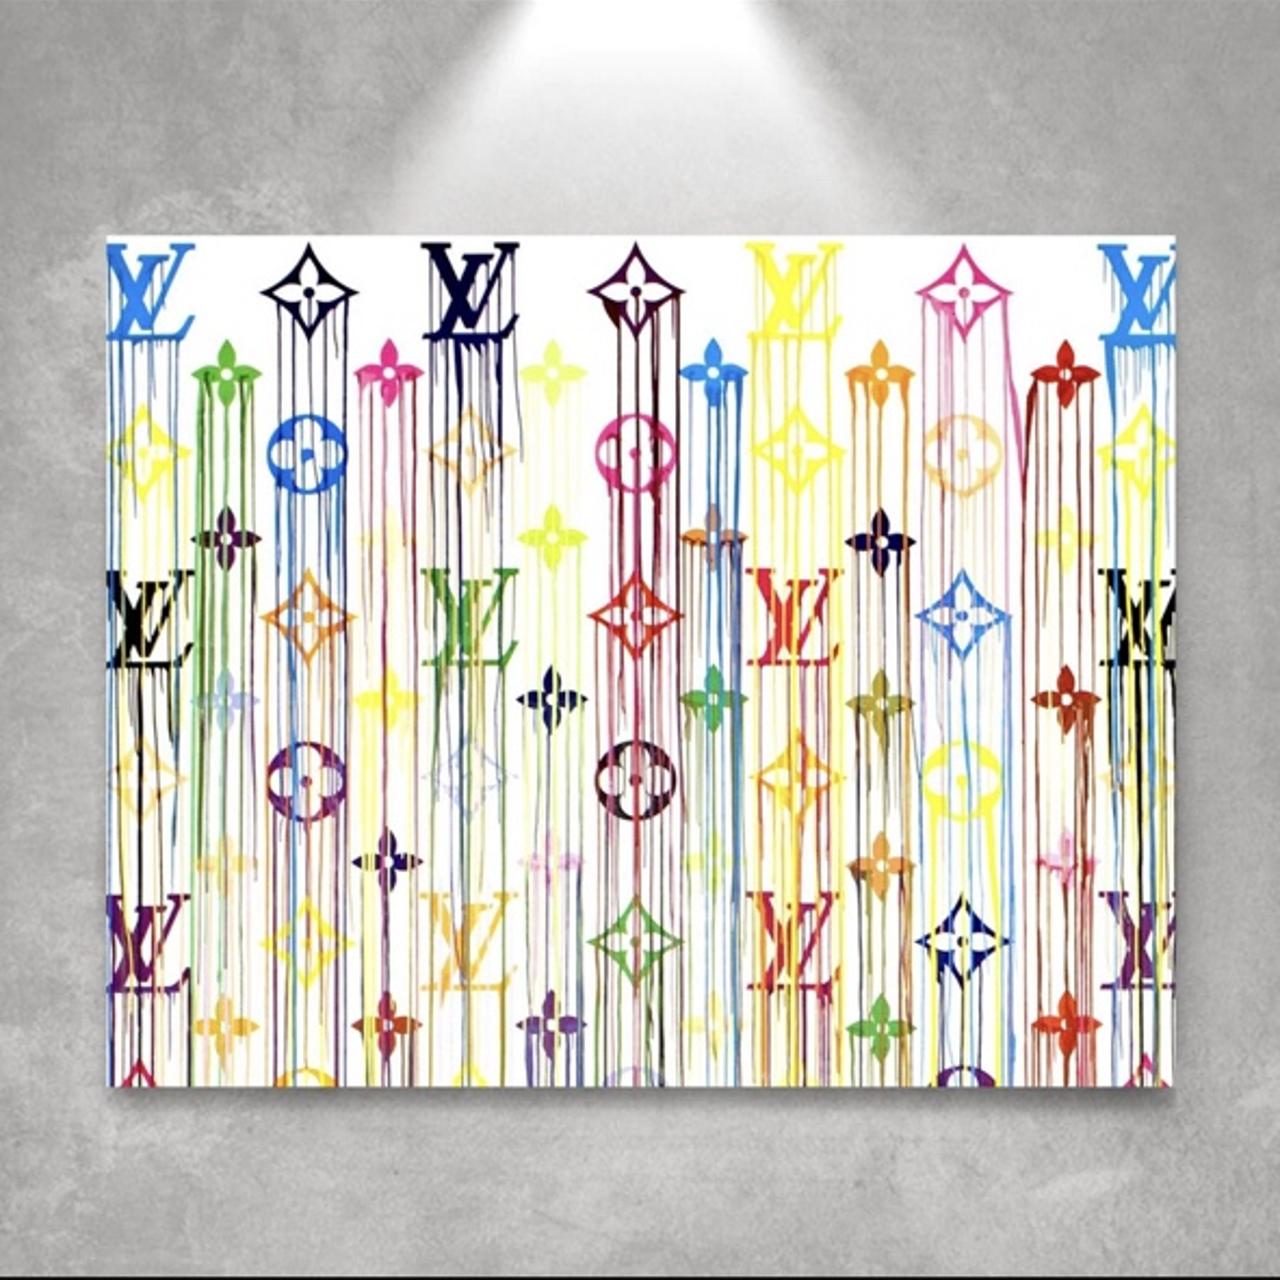 Rainbow Louis Vuitton Wallpapers - Top Free Rainbow Louis Vuitton